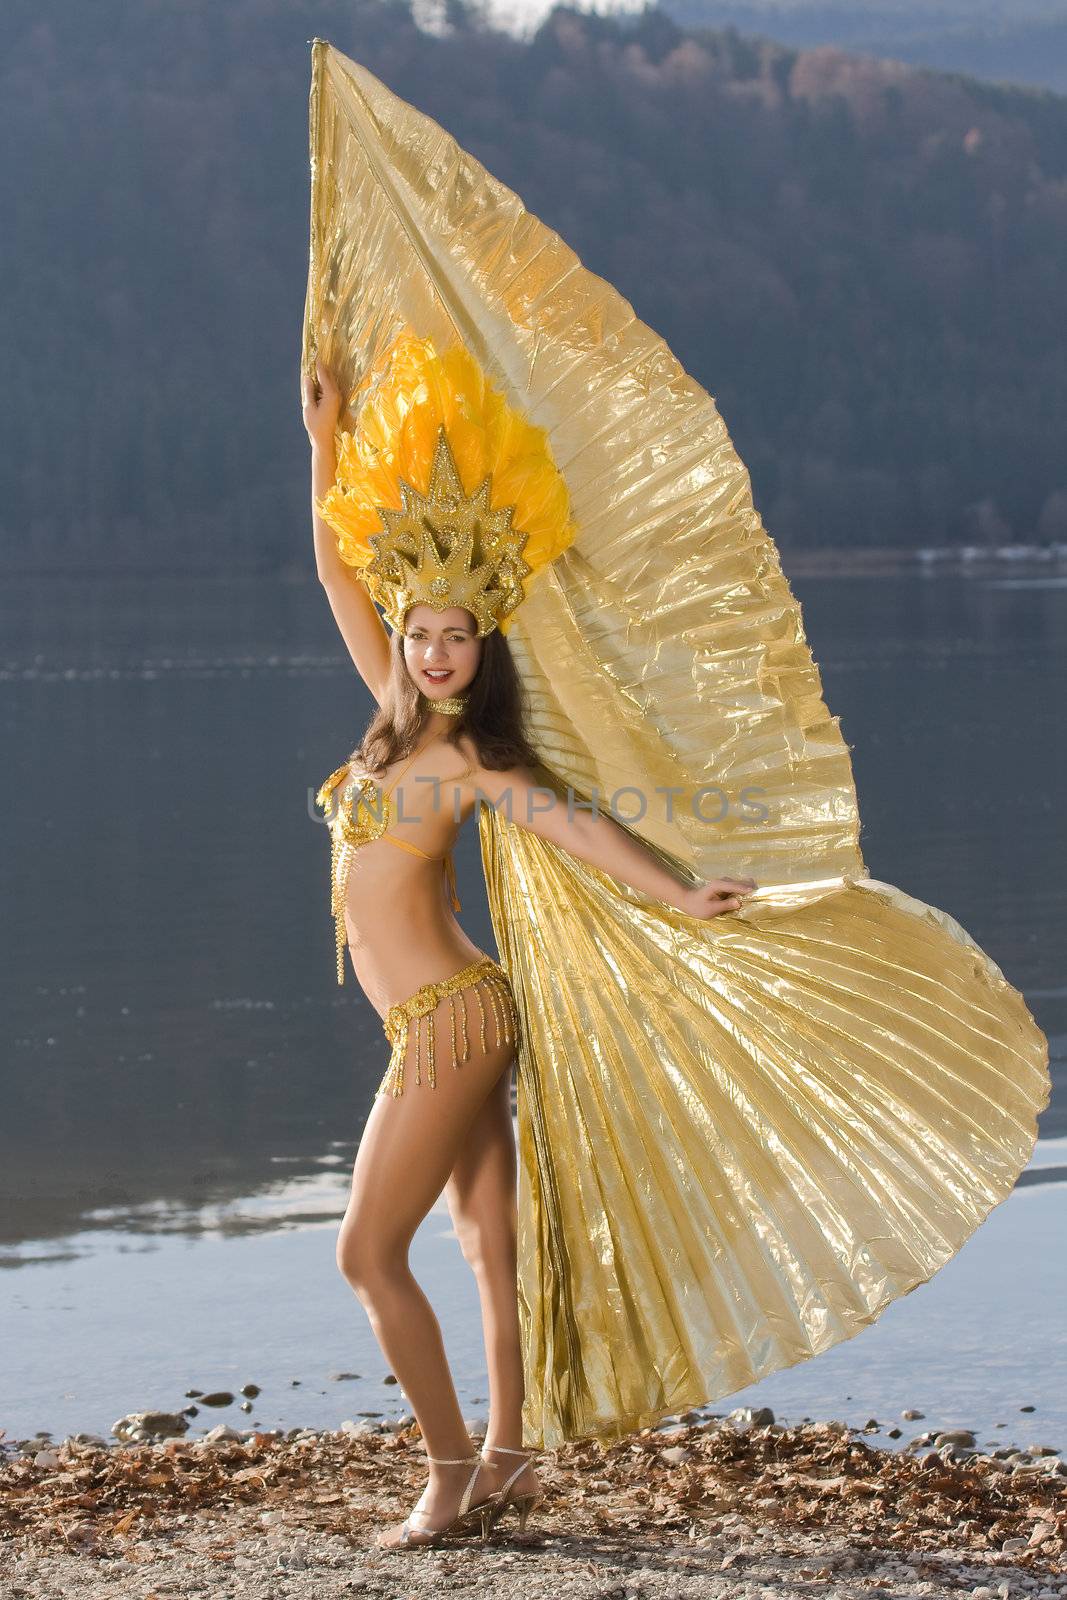 Young girl in a very elaborate costume Samba